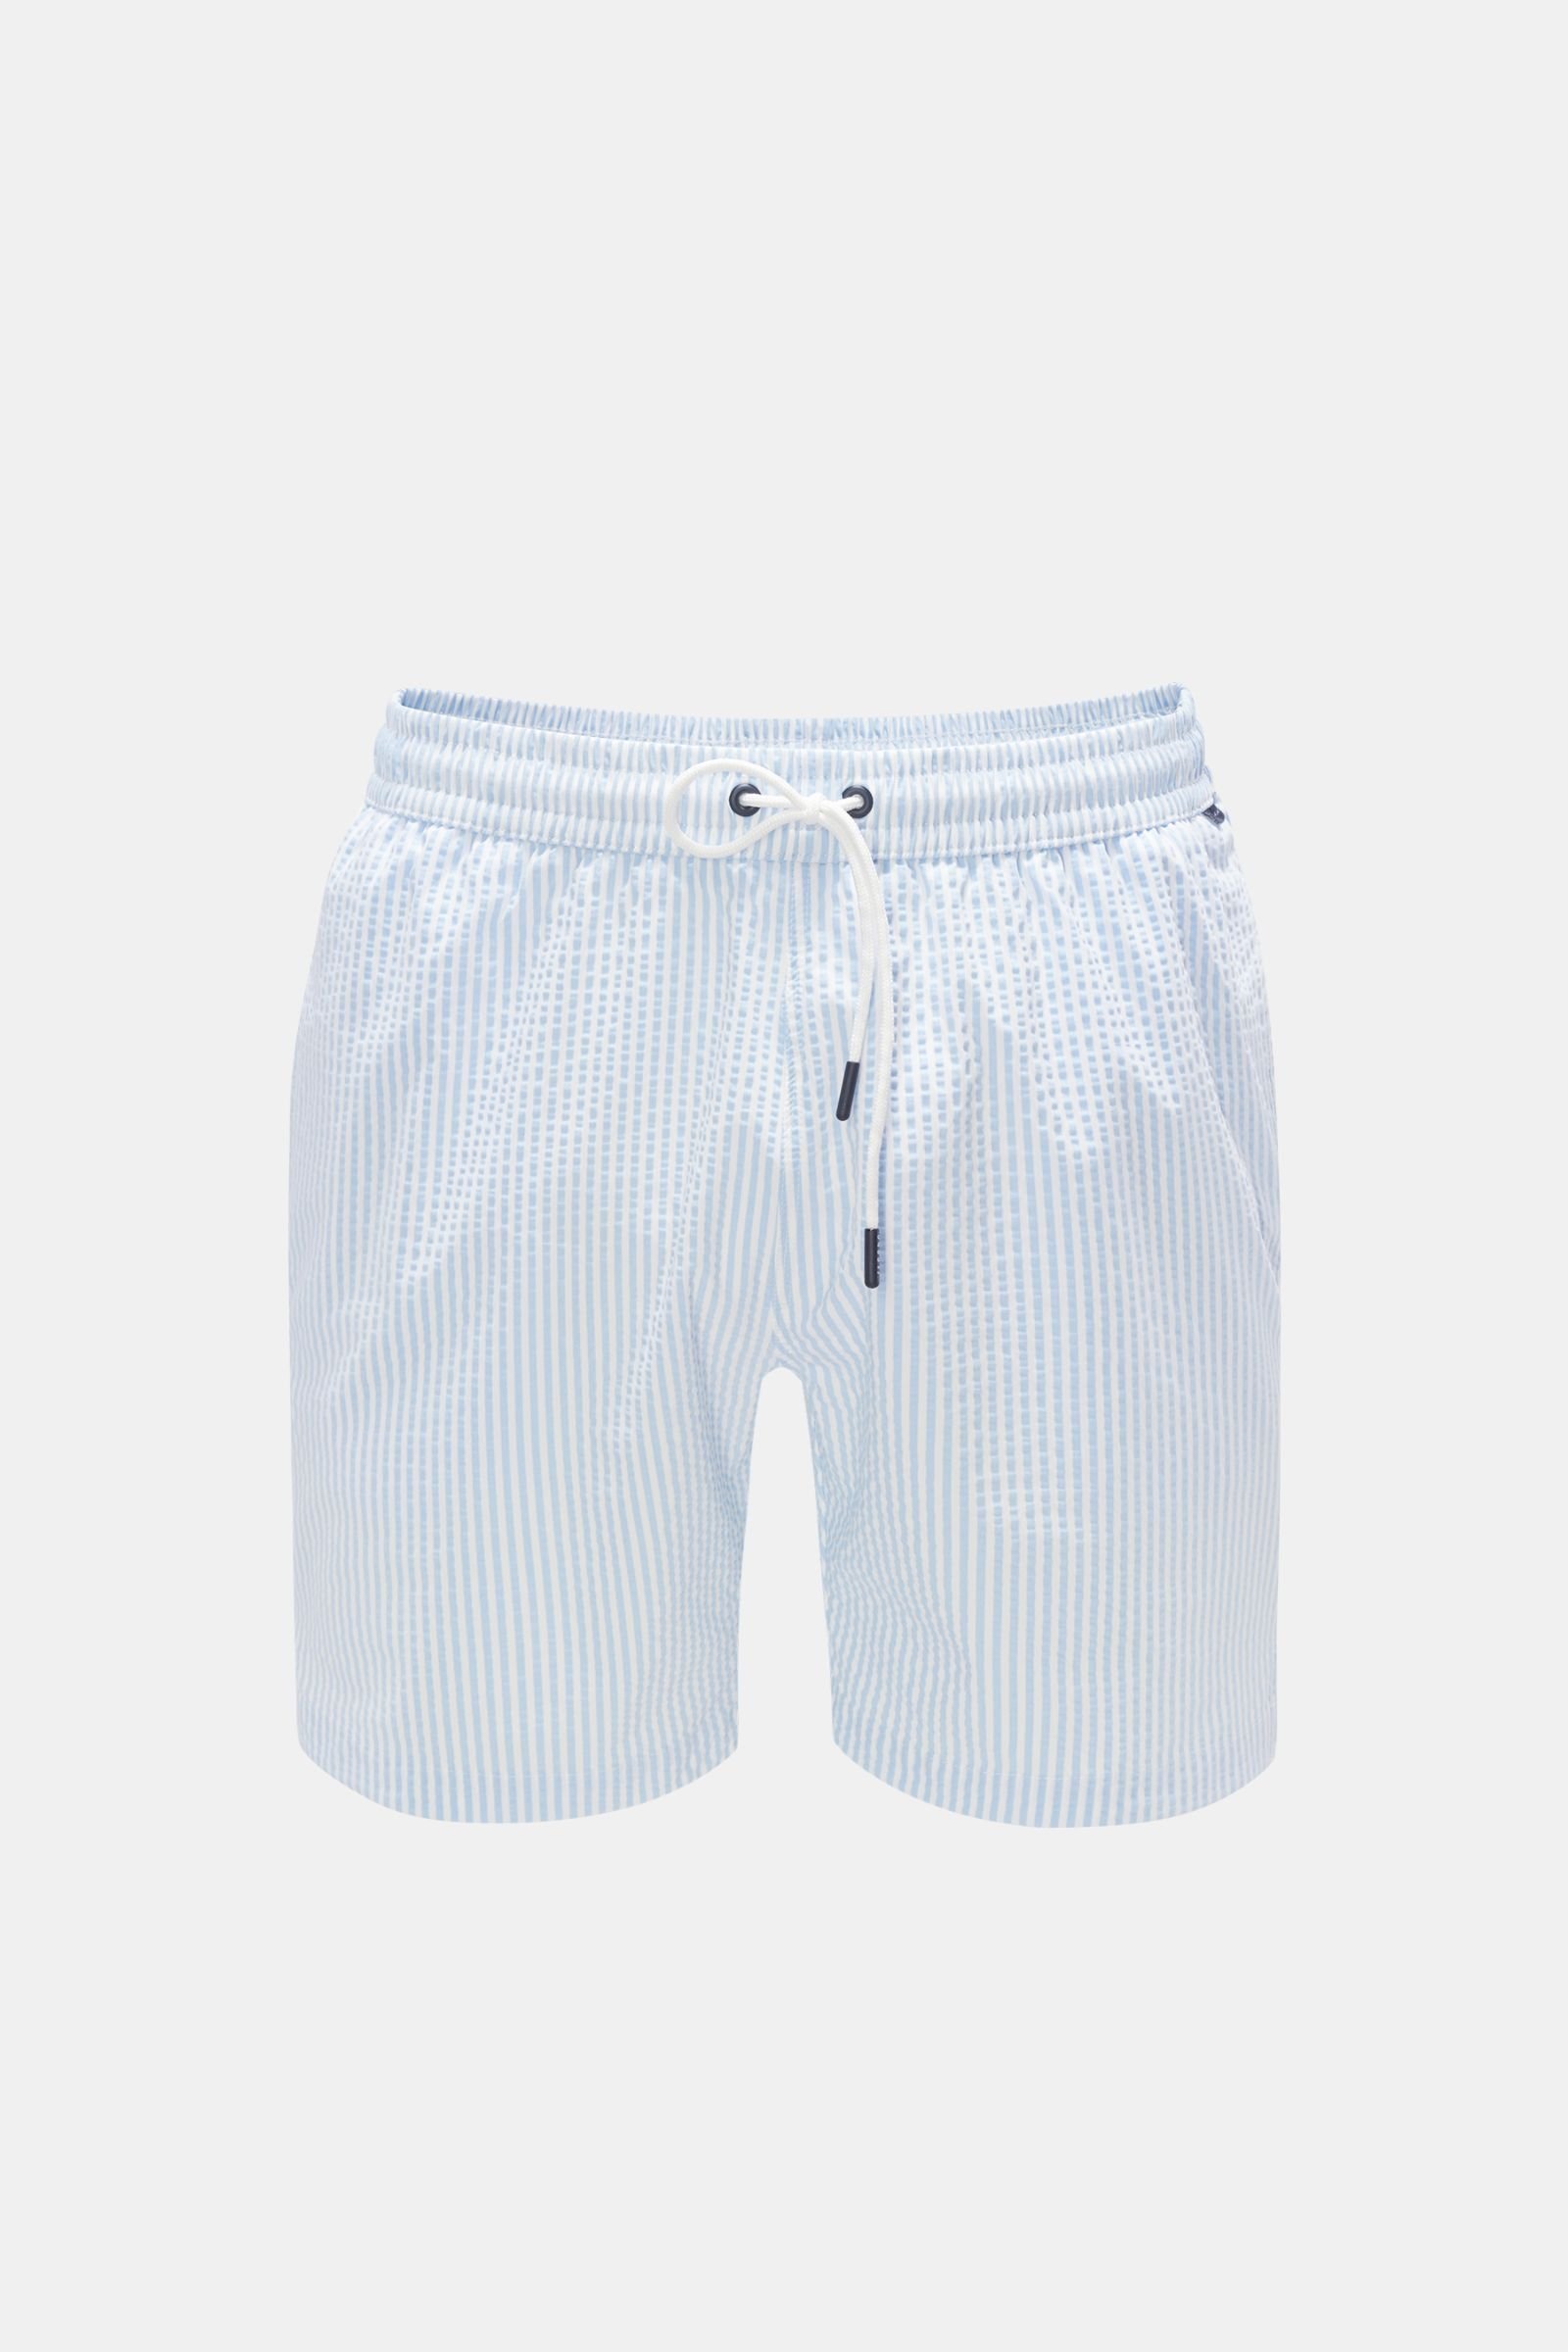 Seersucker swim shorts 'Seersucker Swim' light blue/white striped